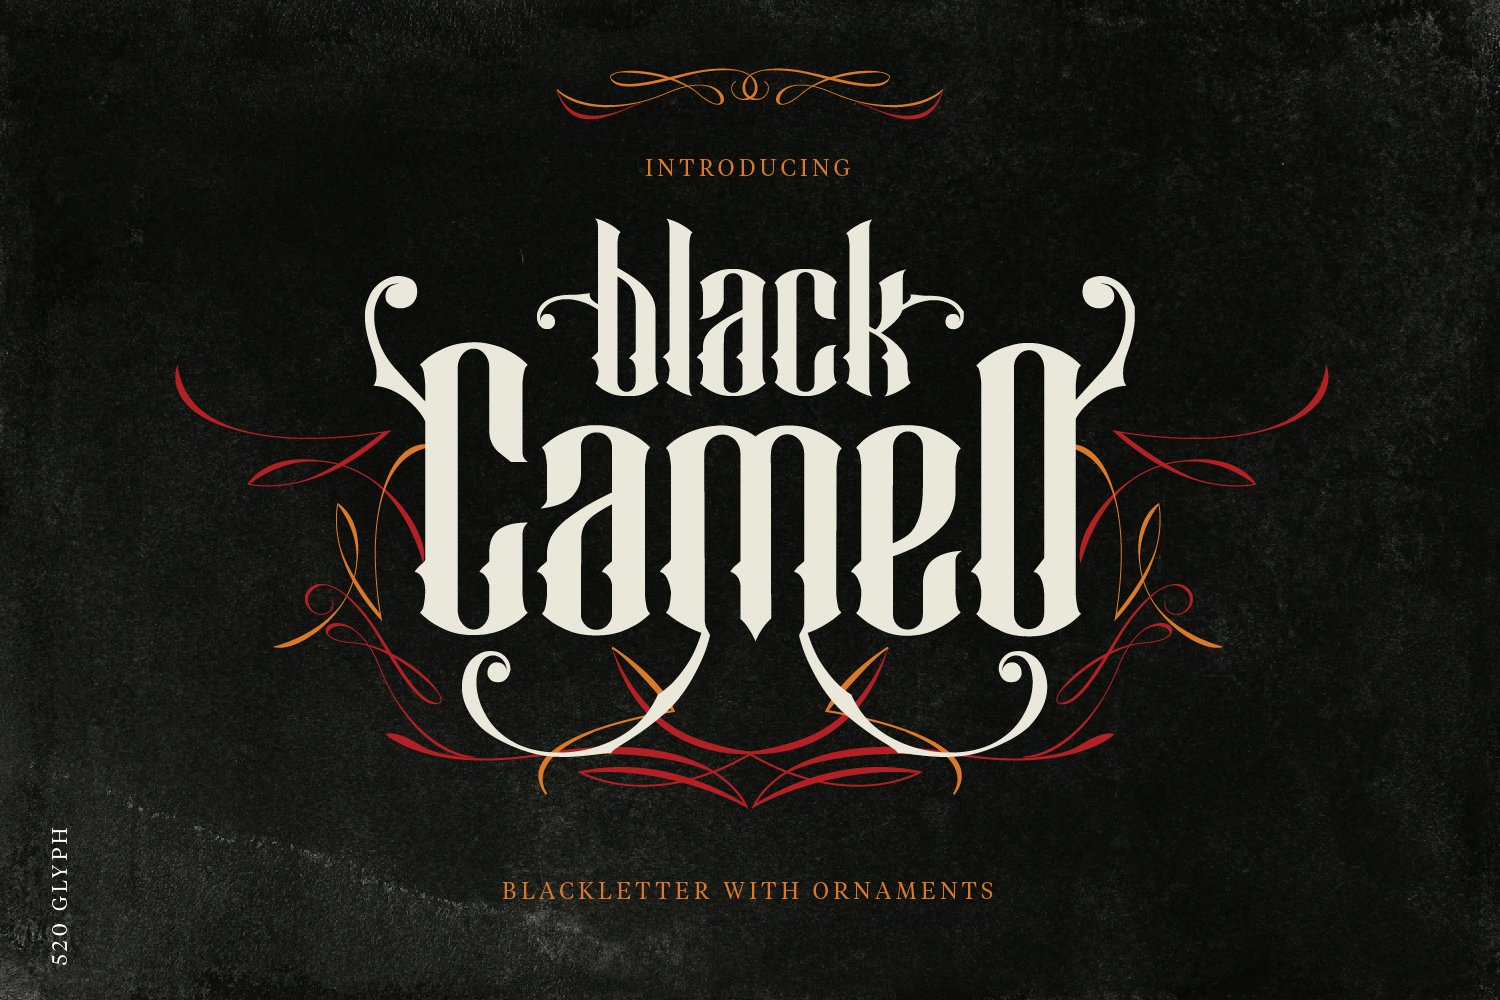 Black Cameo - With Bonus Ornaments cover image.